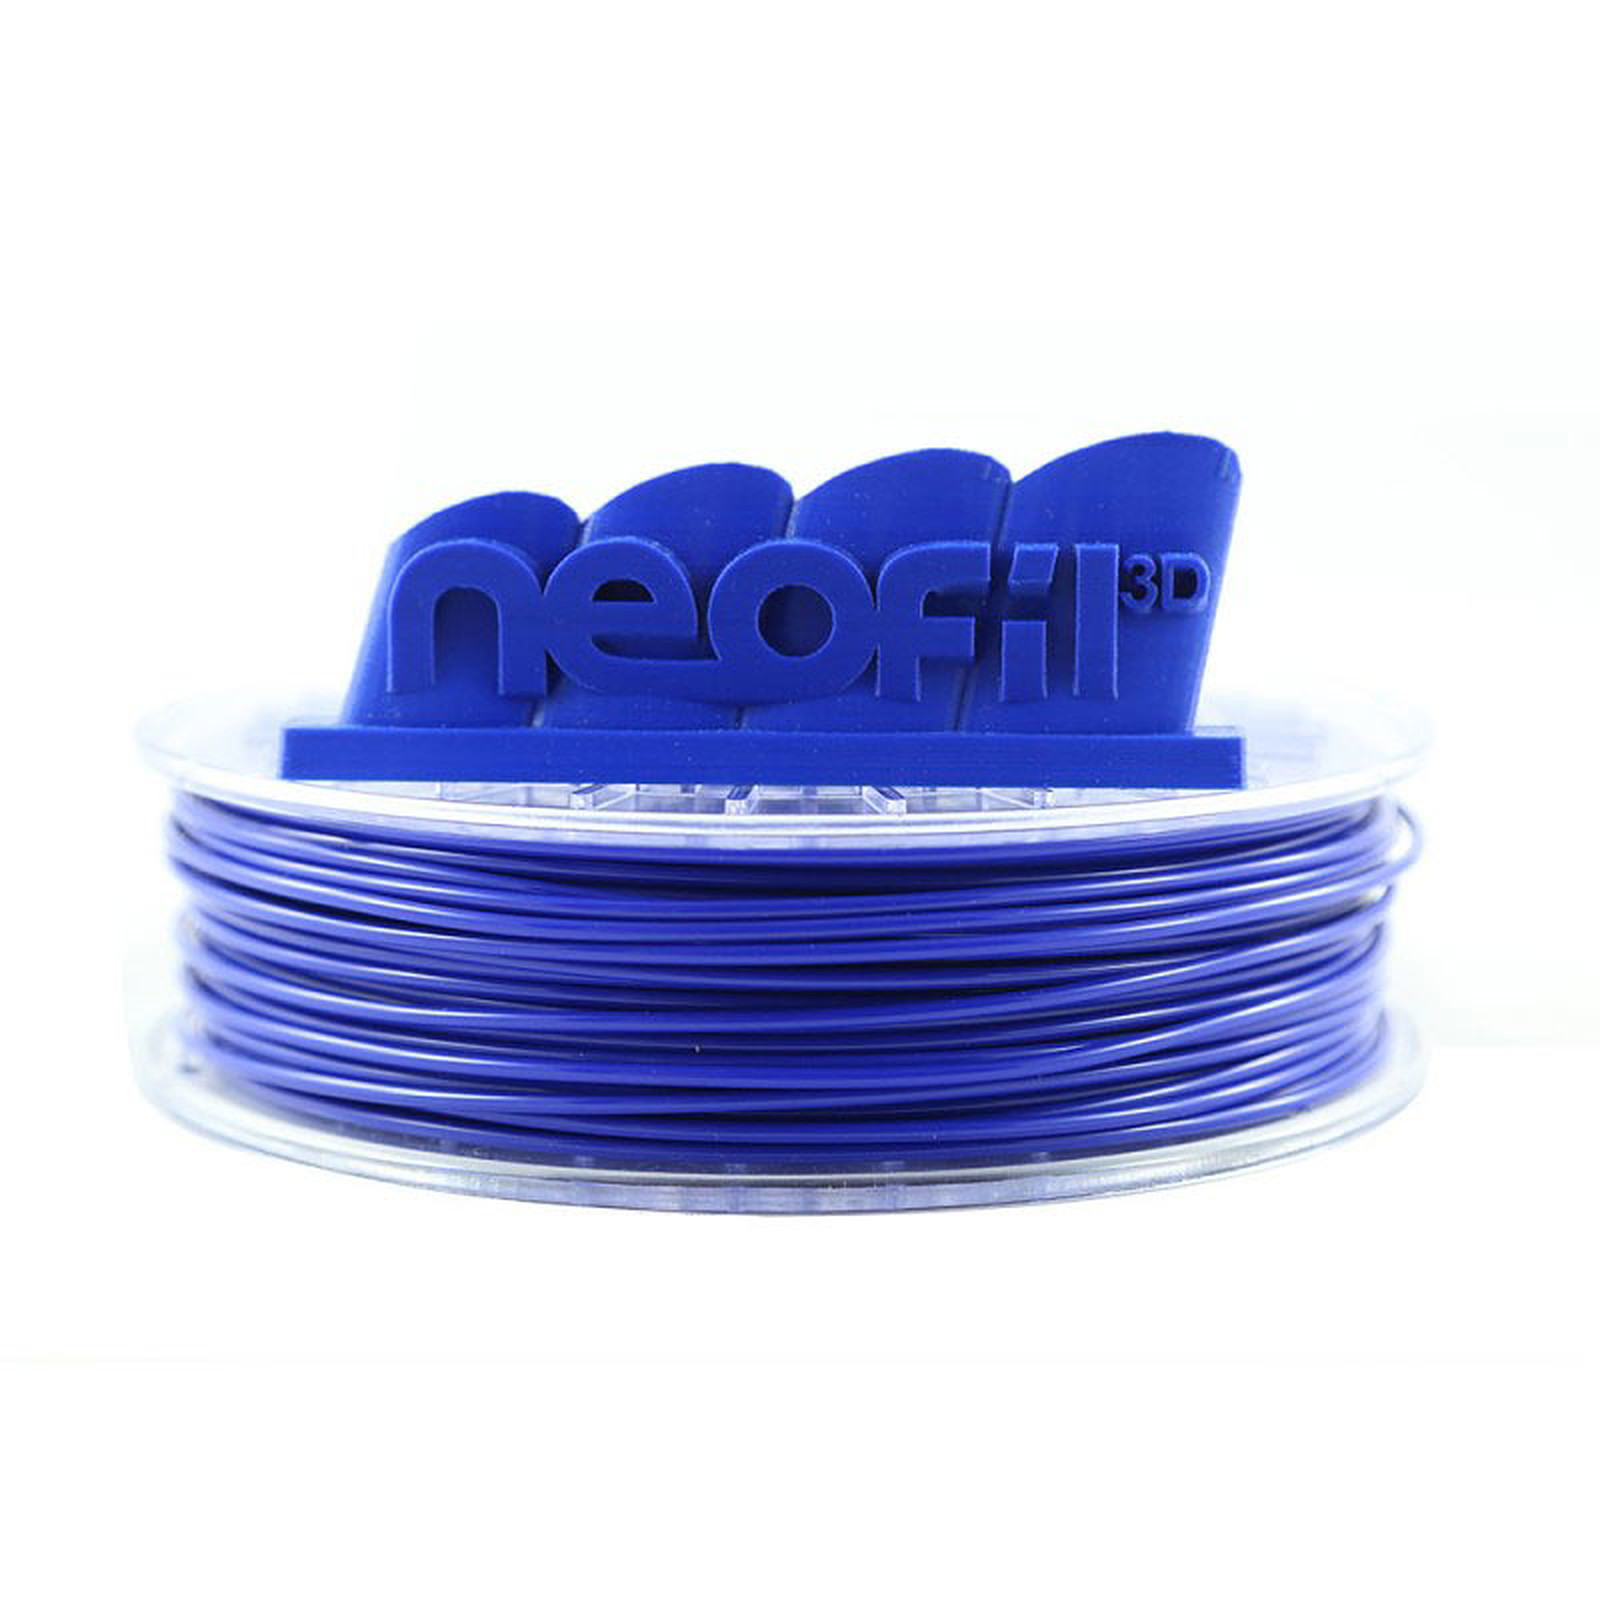 Neofil3D Bobine PLA 1.75mm 750g - Bleu fonce - Filament 3D Neofil3D